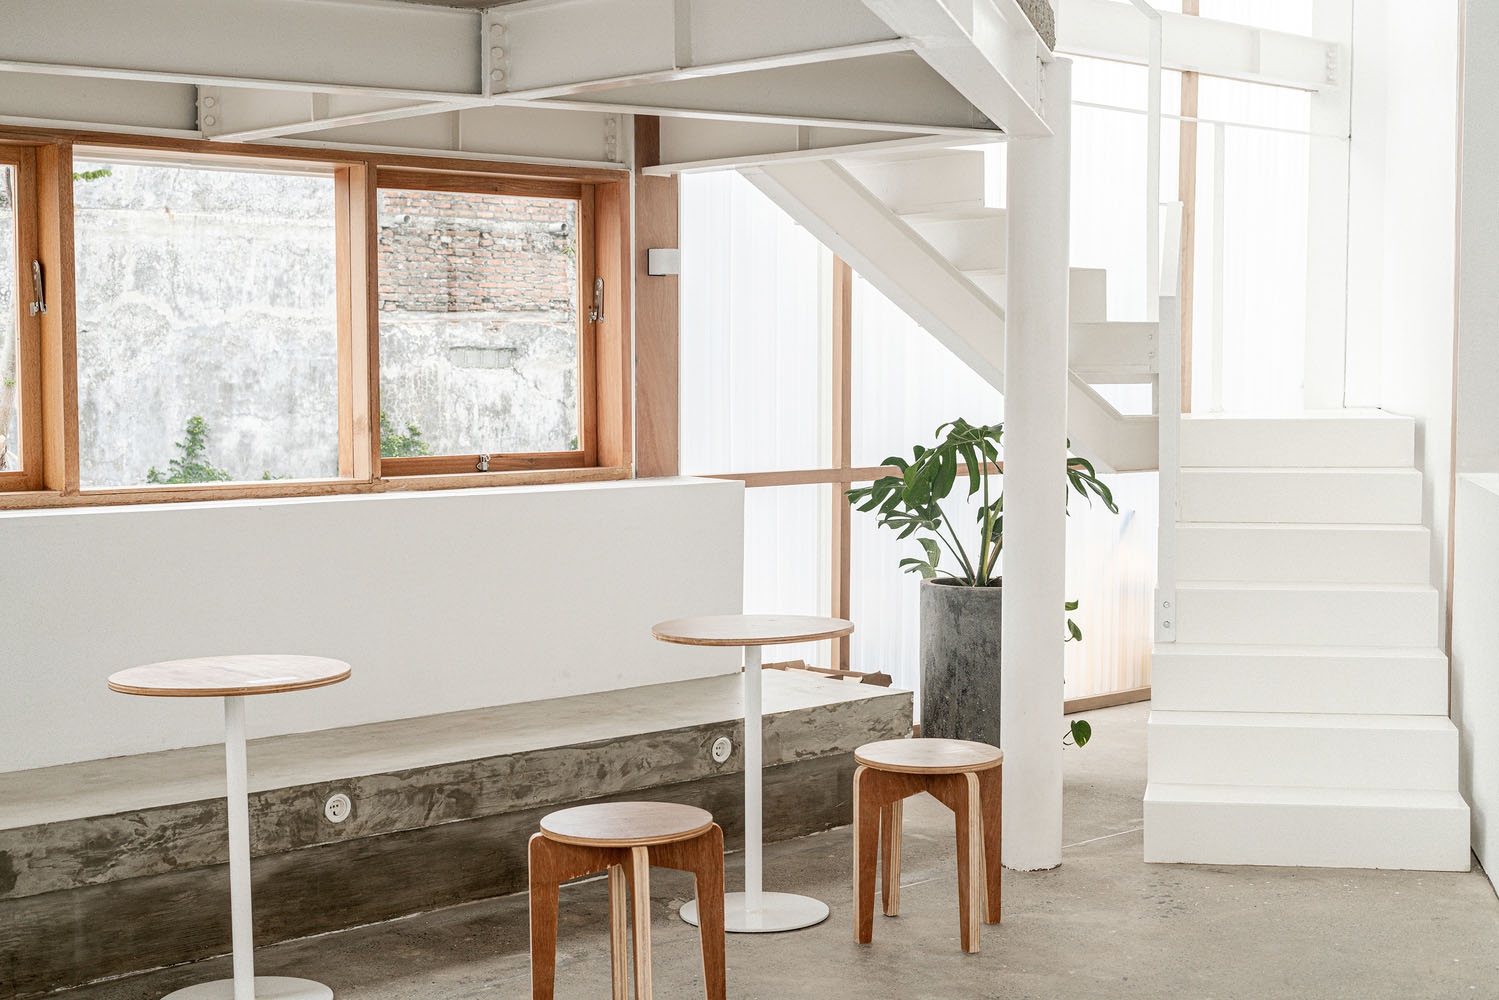 ARA Studio,咖啡廳,咖啡店設計,150㎡咖啡廳設計,Jokopi MERR,白色極簡風格咖啡廳,國外咖啡廳設計案例